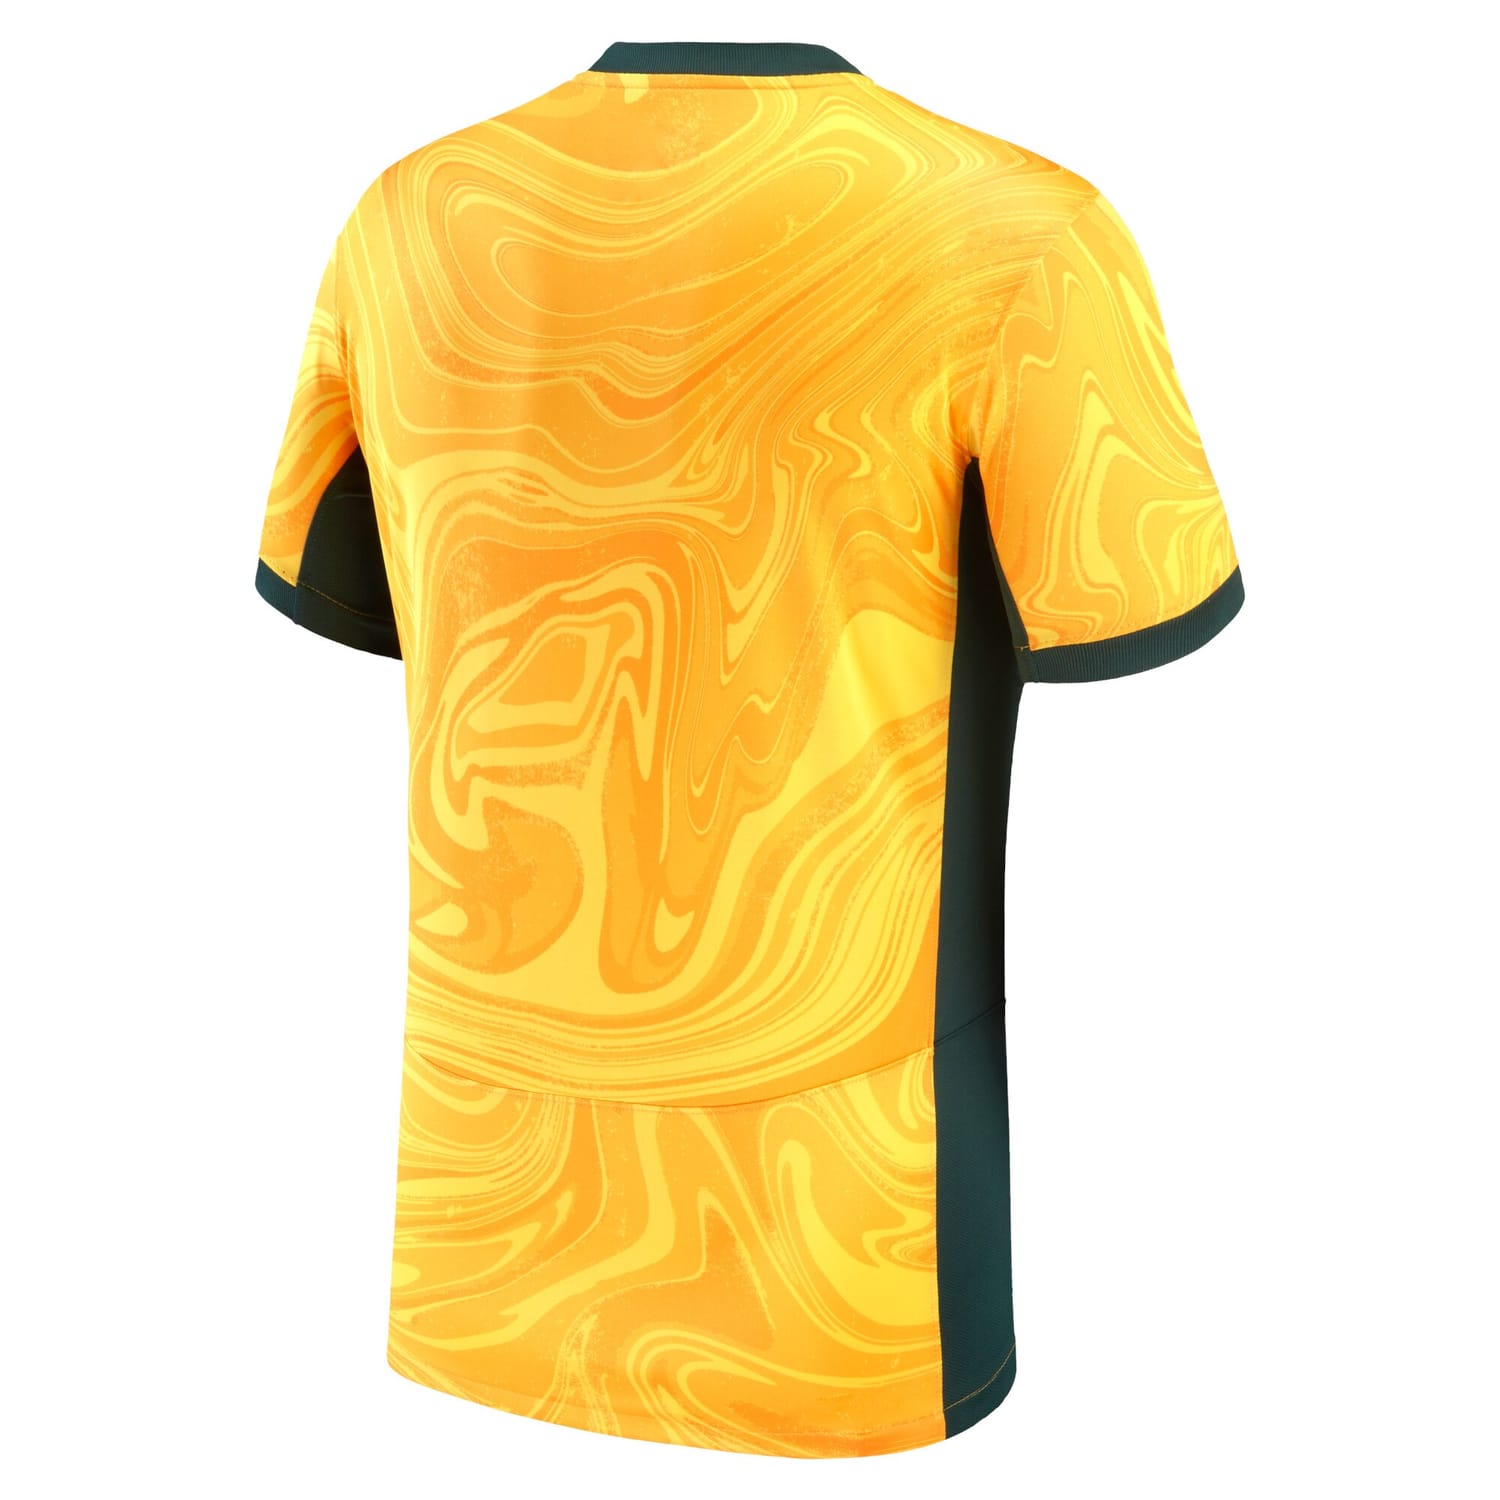 Australia National Team Home Jersey Shirt Yellow 2023 for Men